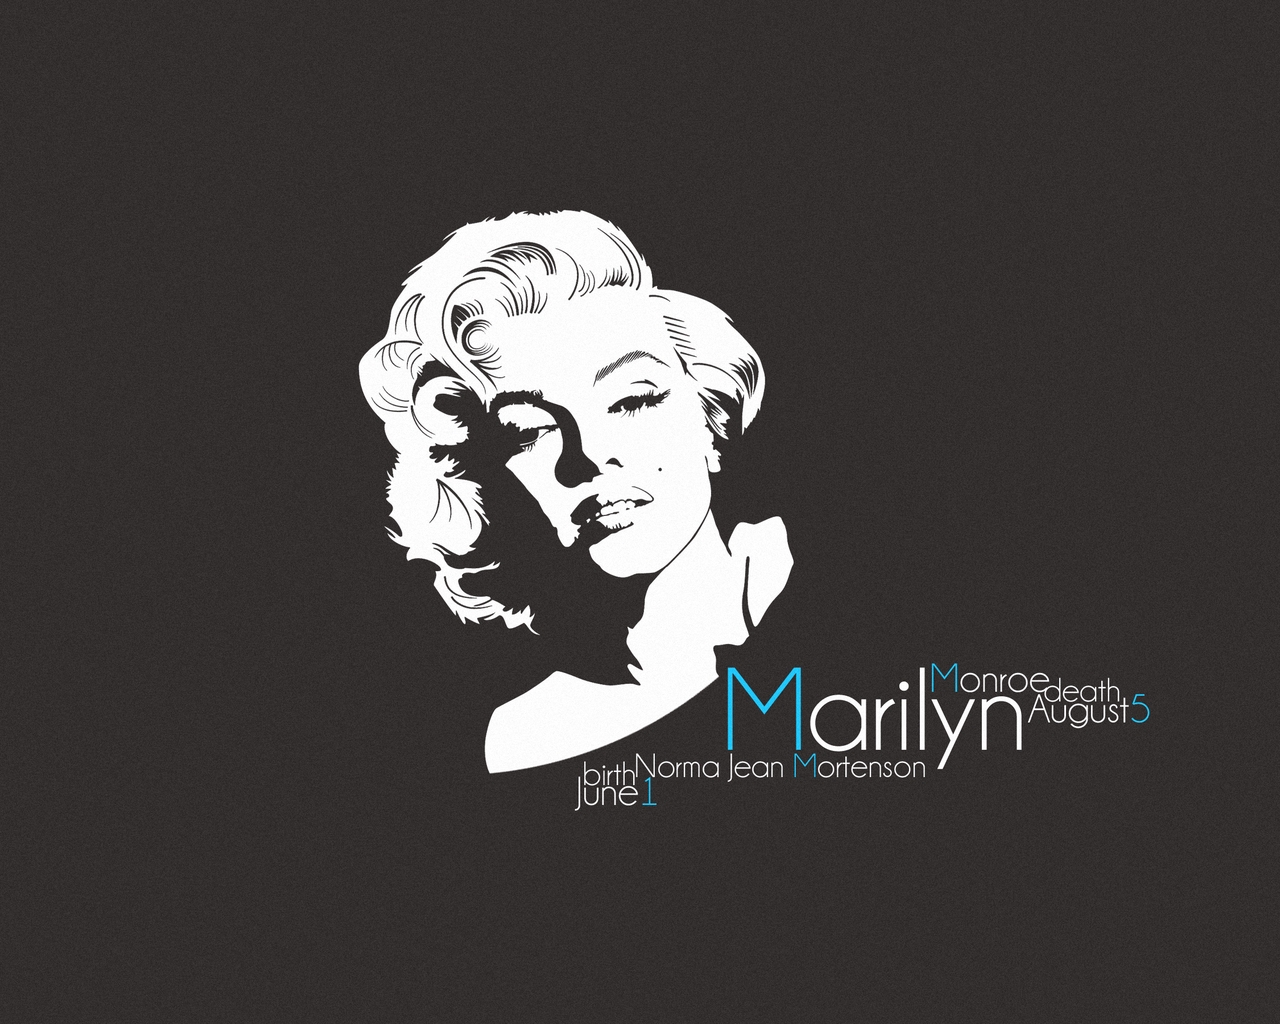 Marilyn Monroe for 1280 x 1024 resolution